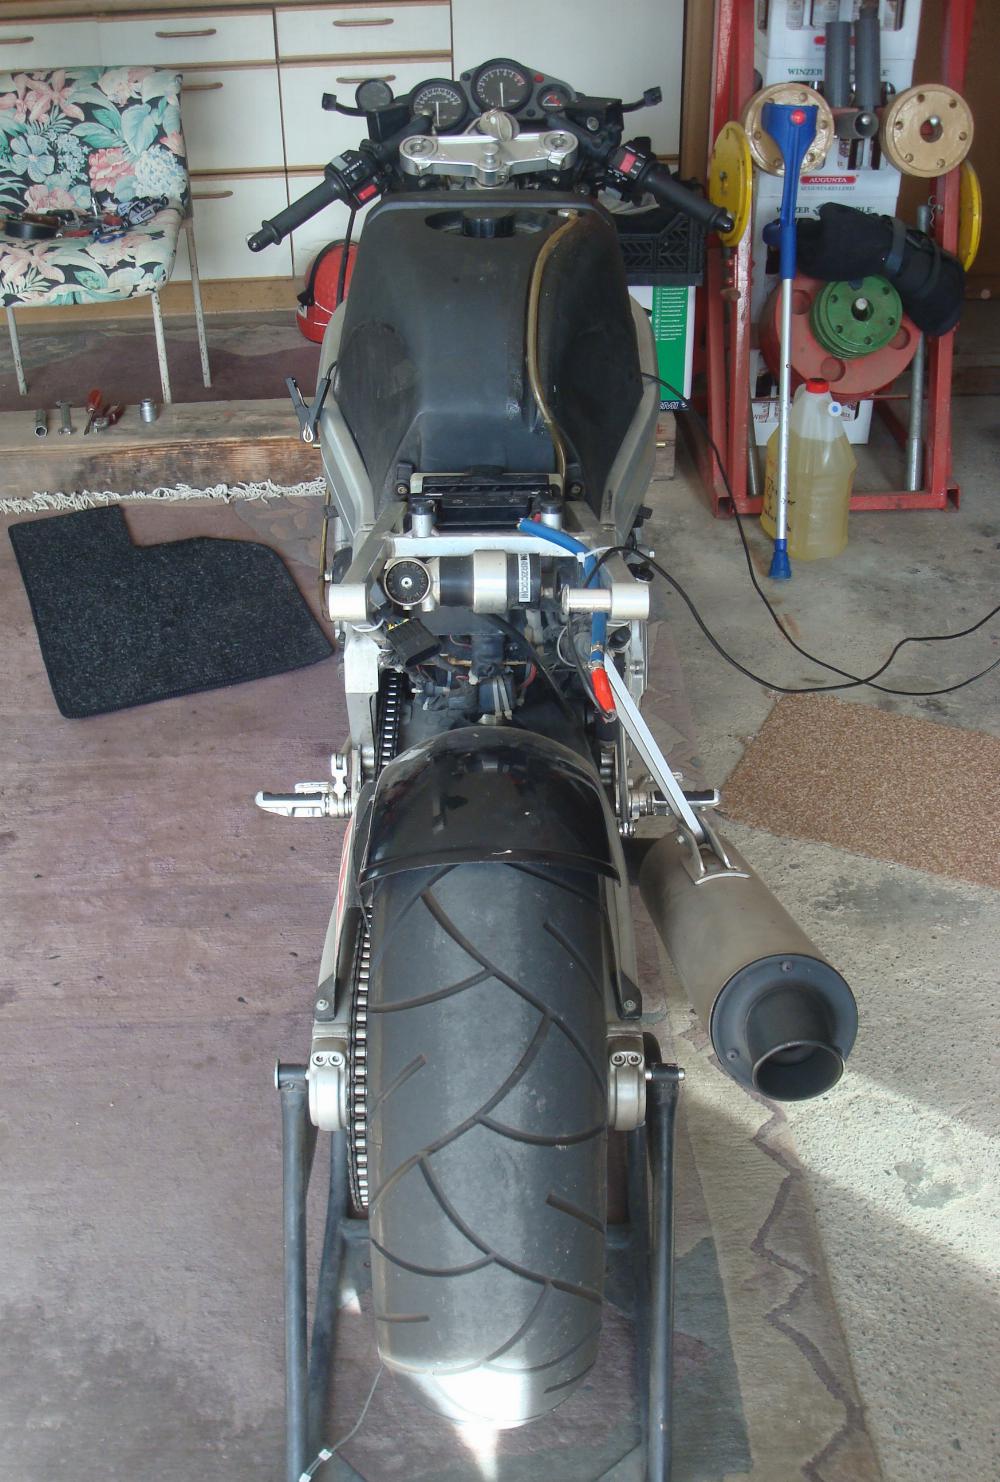 Motorrad verkaufen Bimota YB8 Exup Ankauf